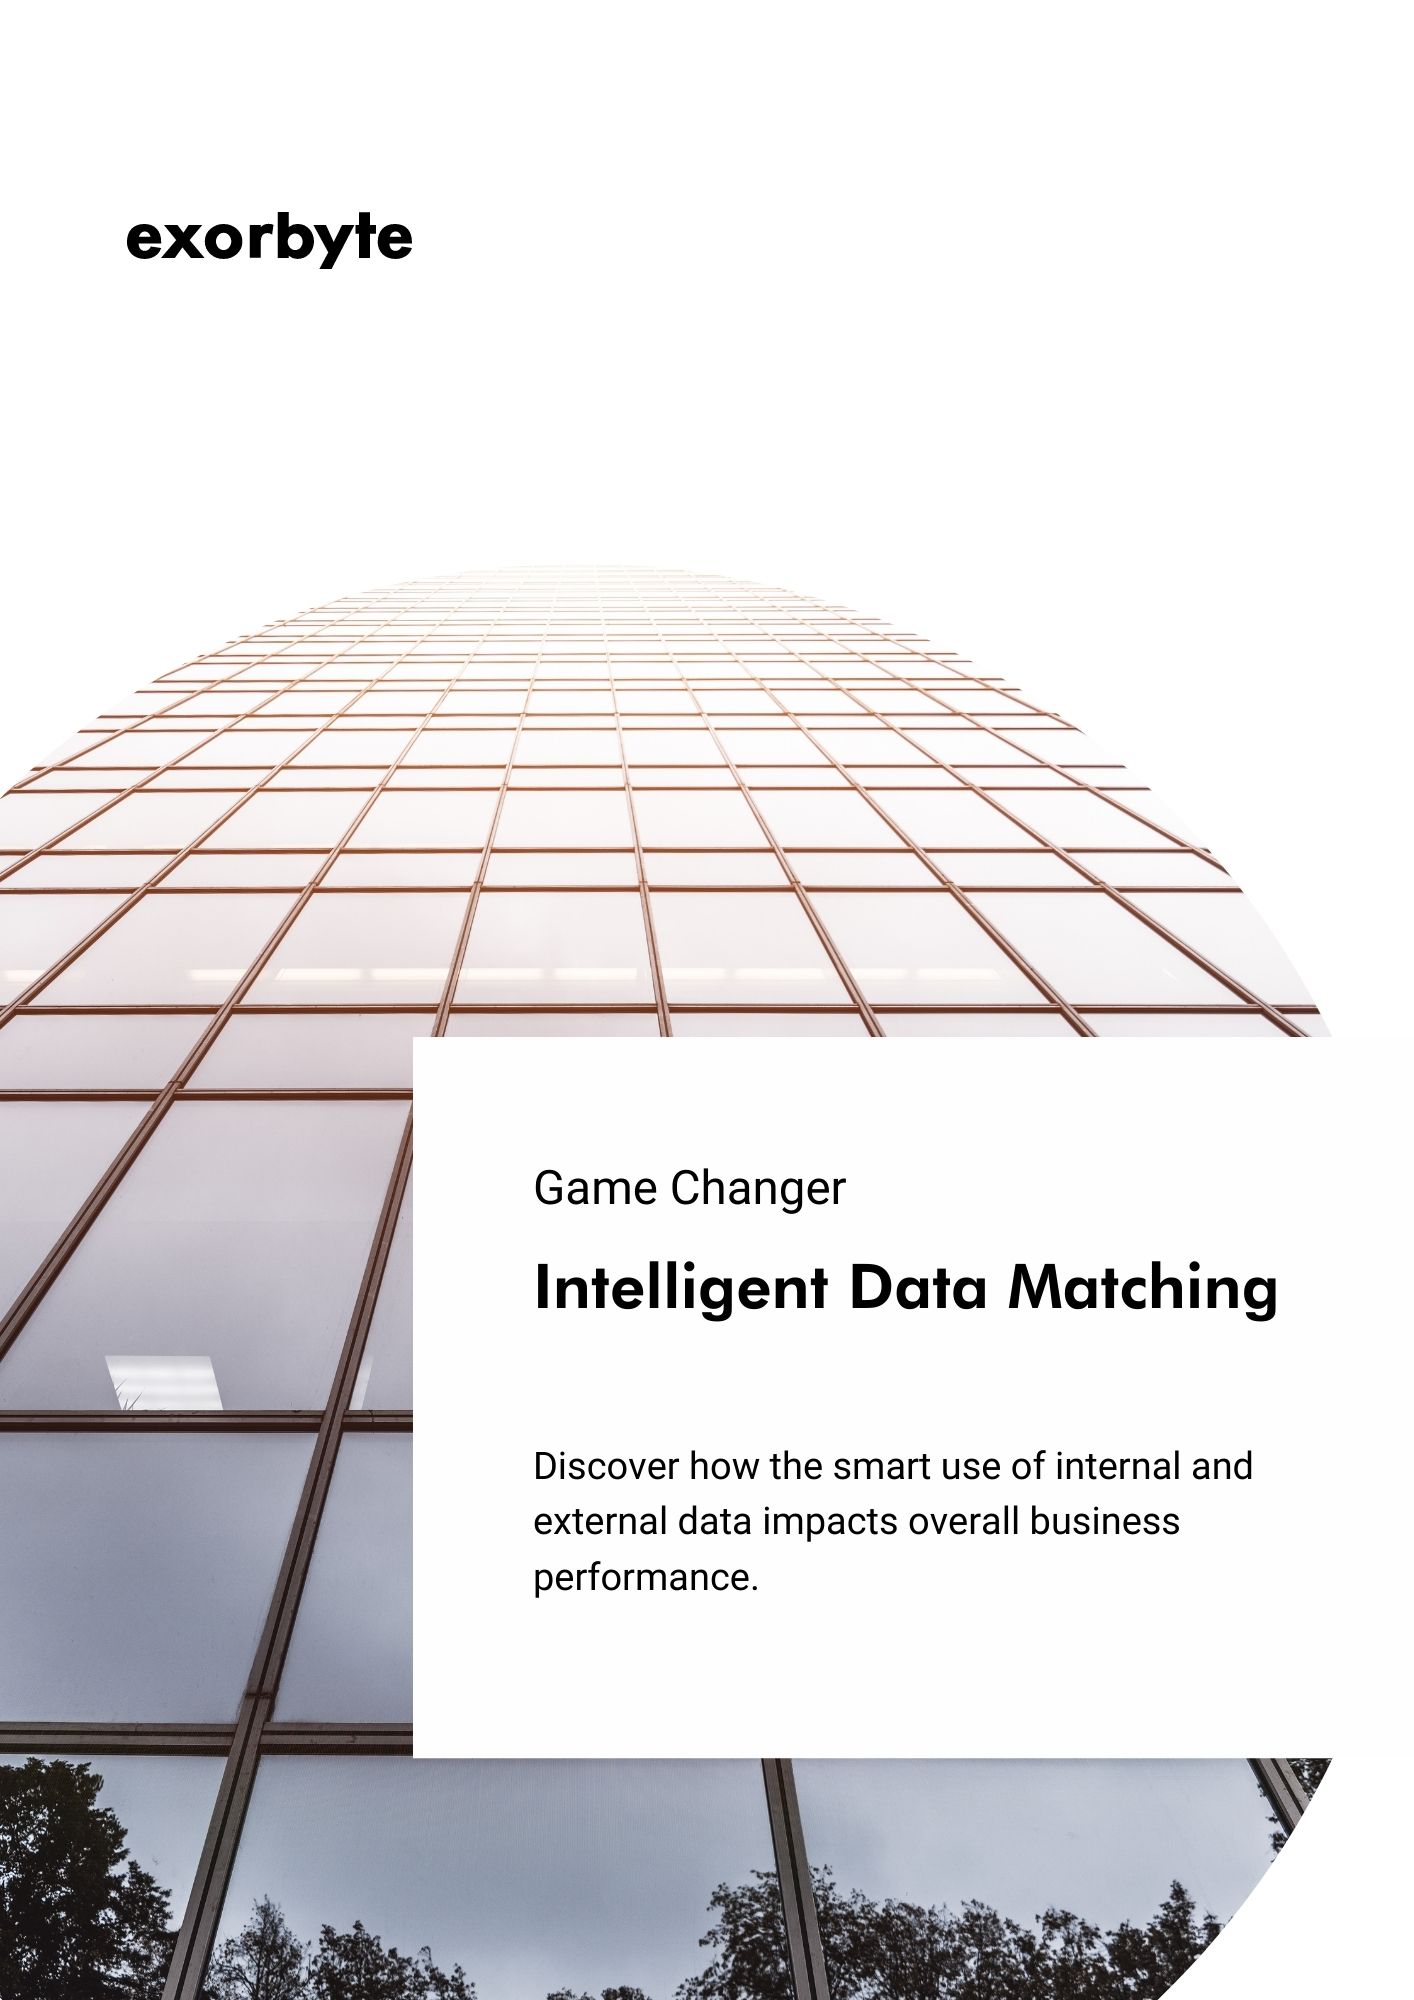 Image-Insight-IDM_Business-Performance-en.jpg